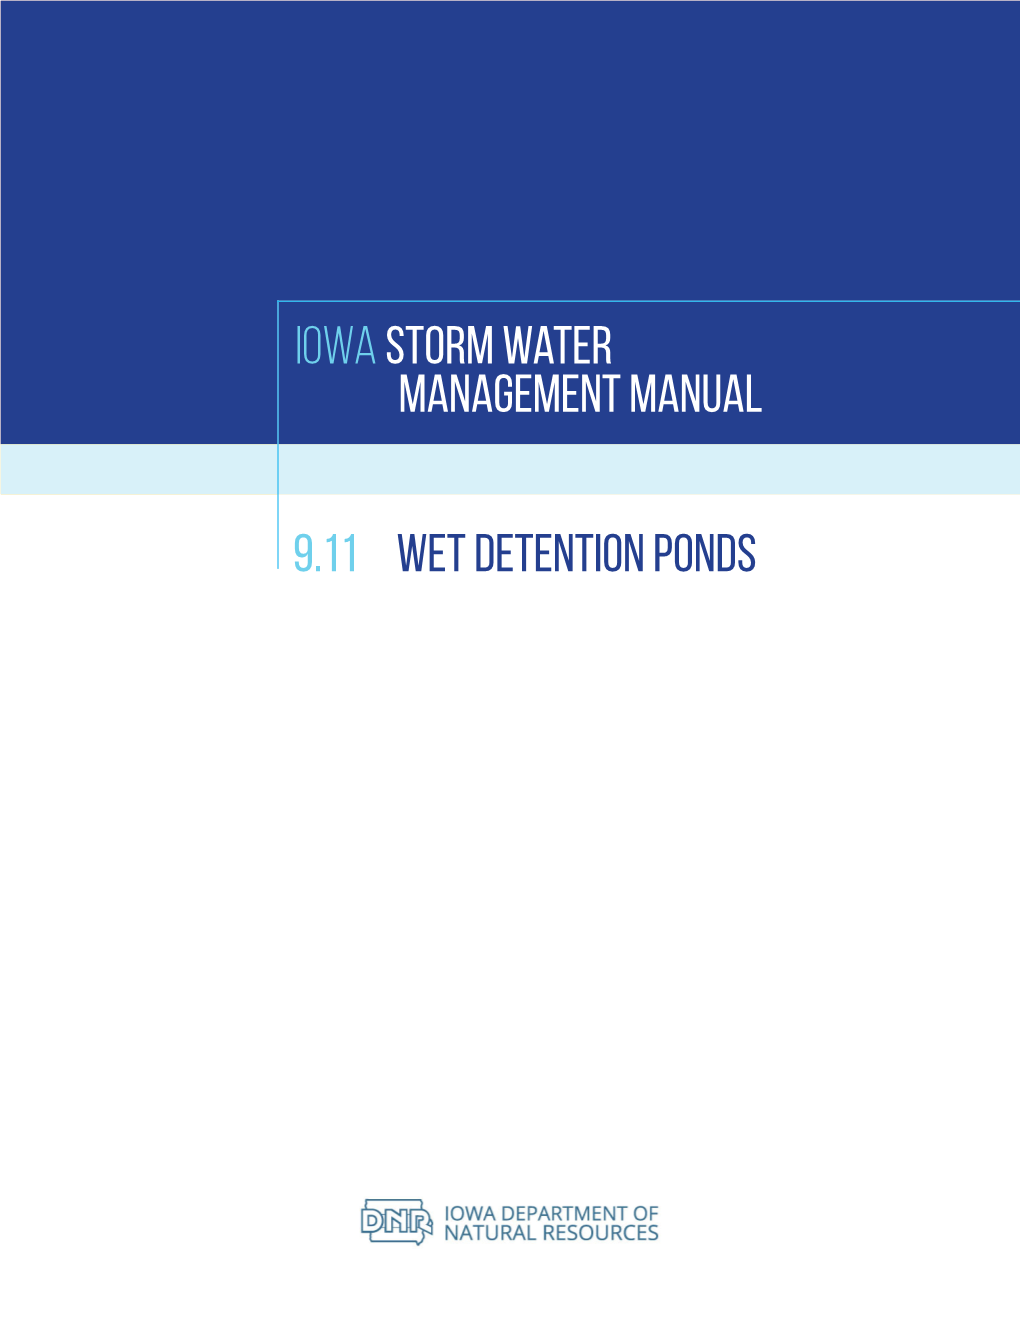 Iowastorm Water Management Manual 9.11 Wet Detention Ponds